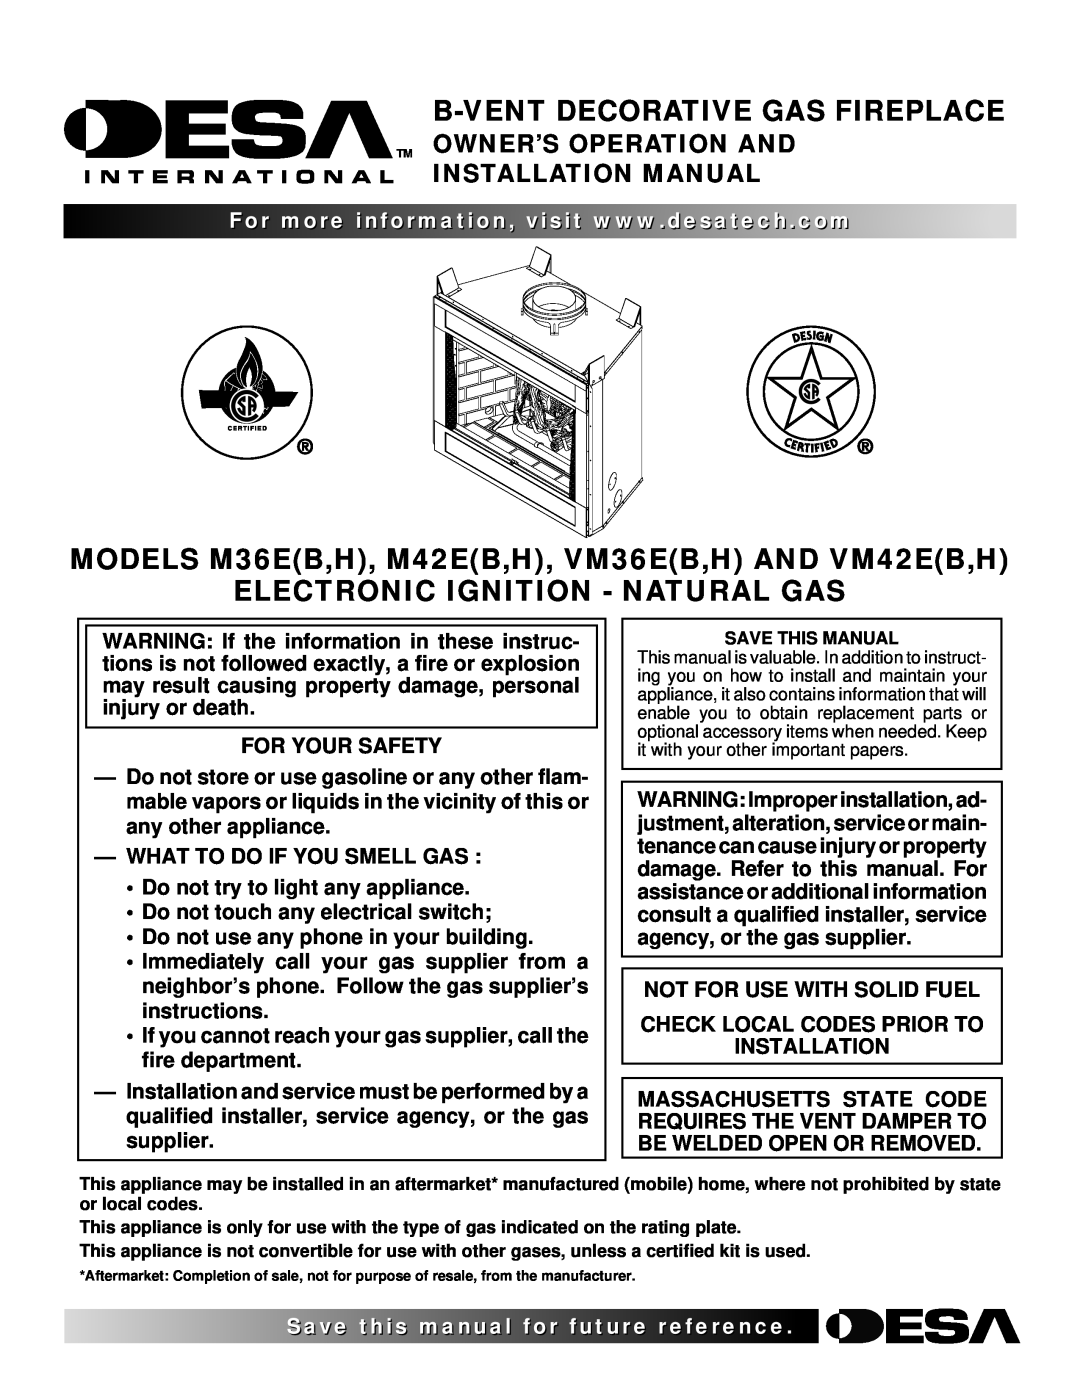 Desa M36E, M42E, VM36E, VM42E installation manual B-Ventdecorative Gas Fireplace, Electronic Ignition - Natural Gas 